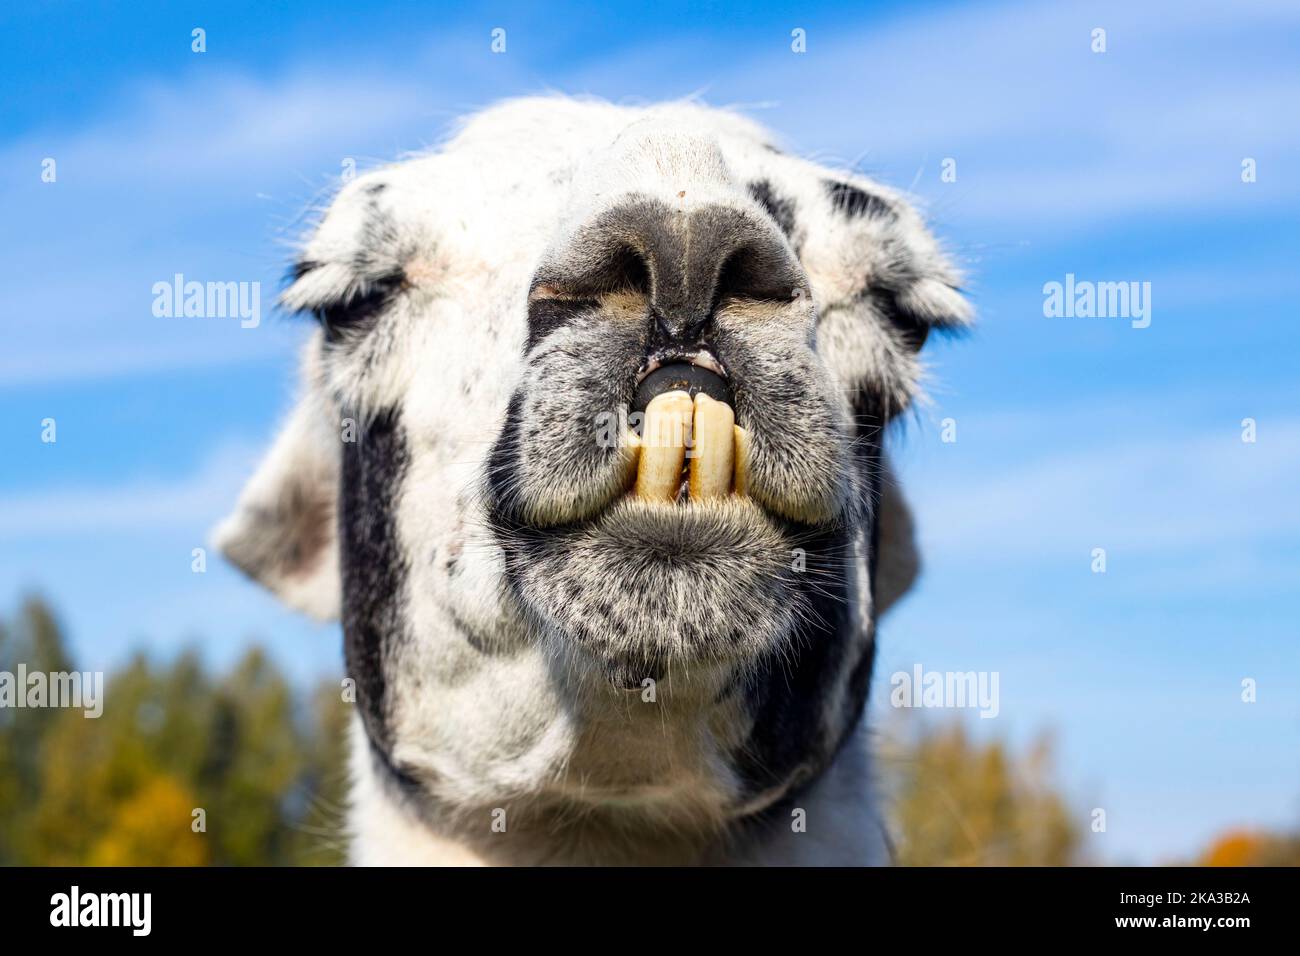 Portrait of a llama with teeth Stock Photo